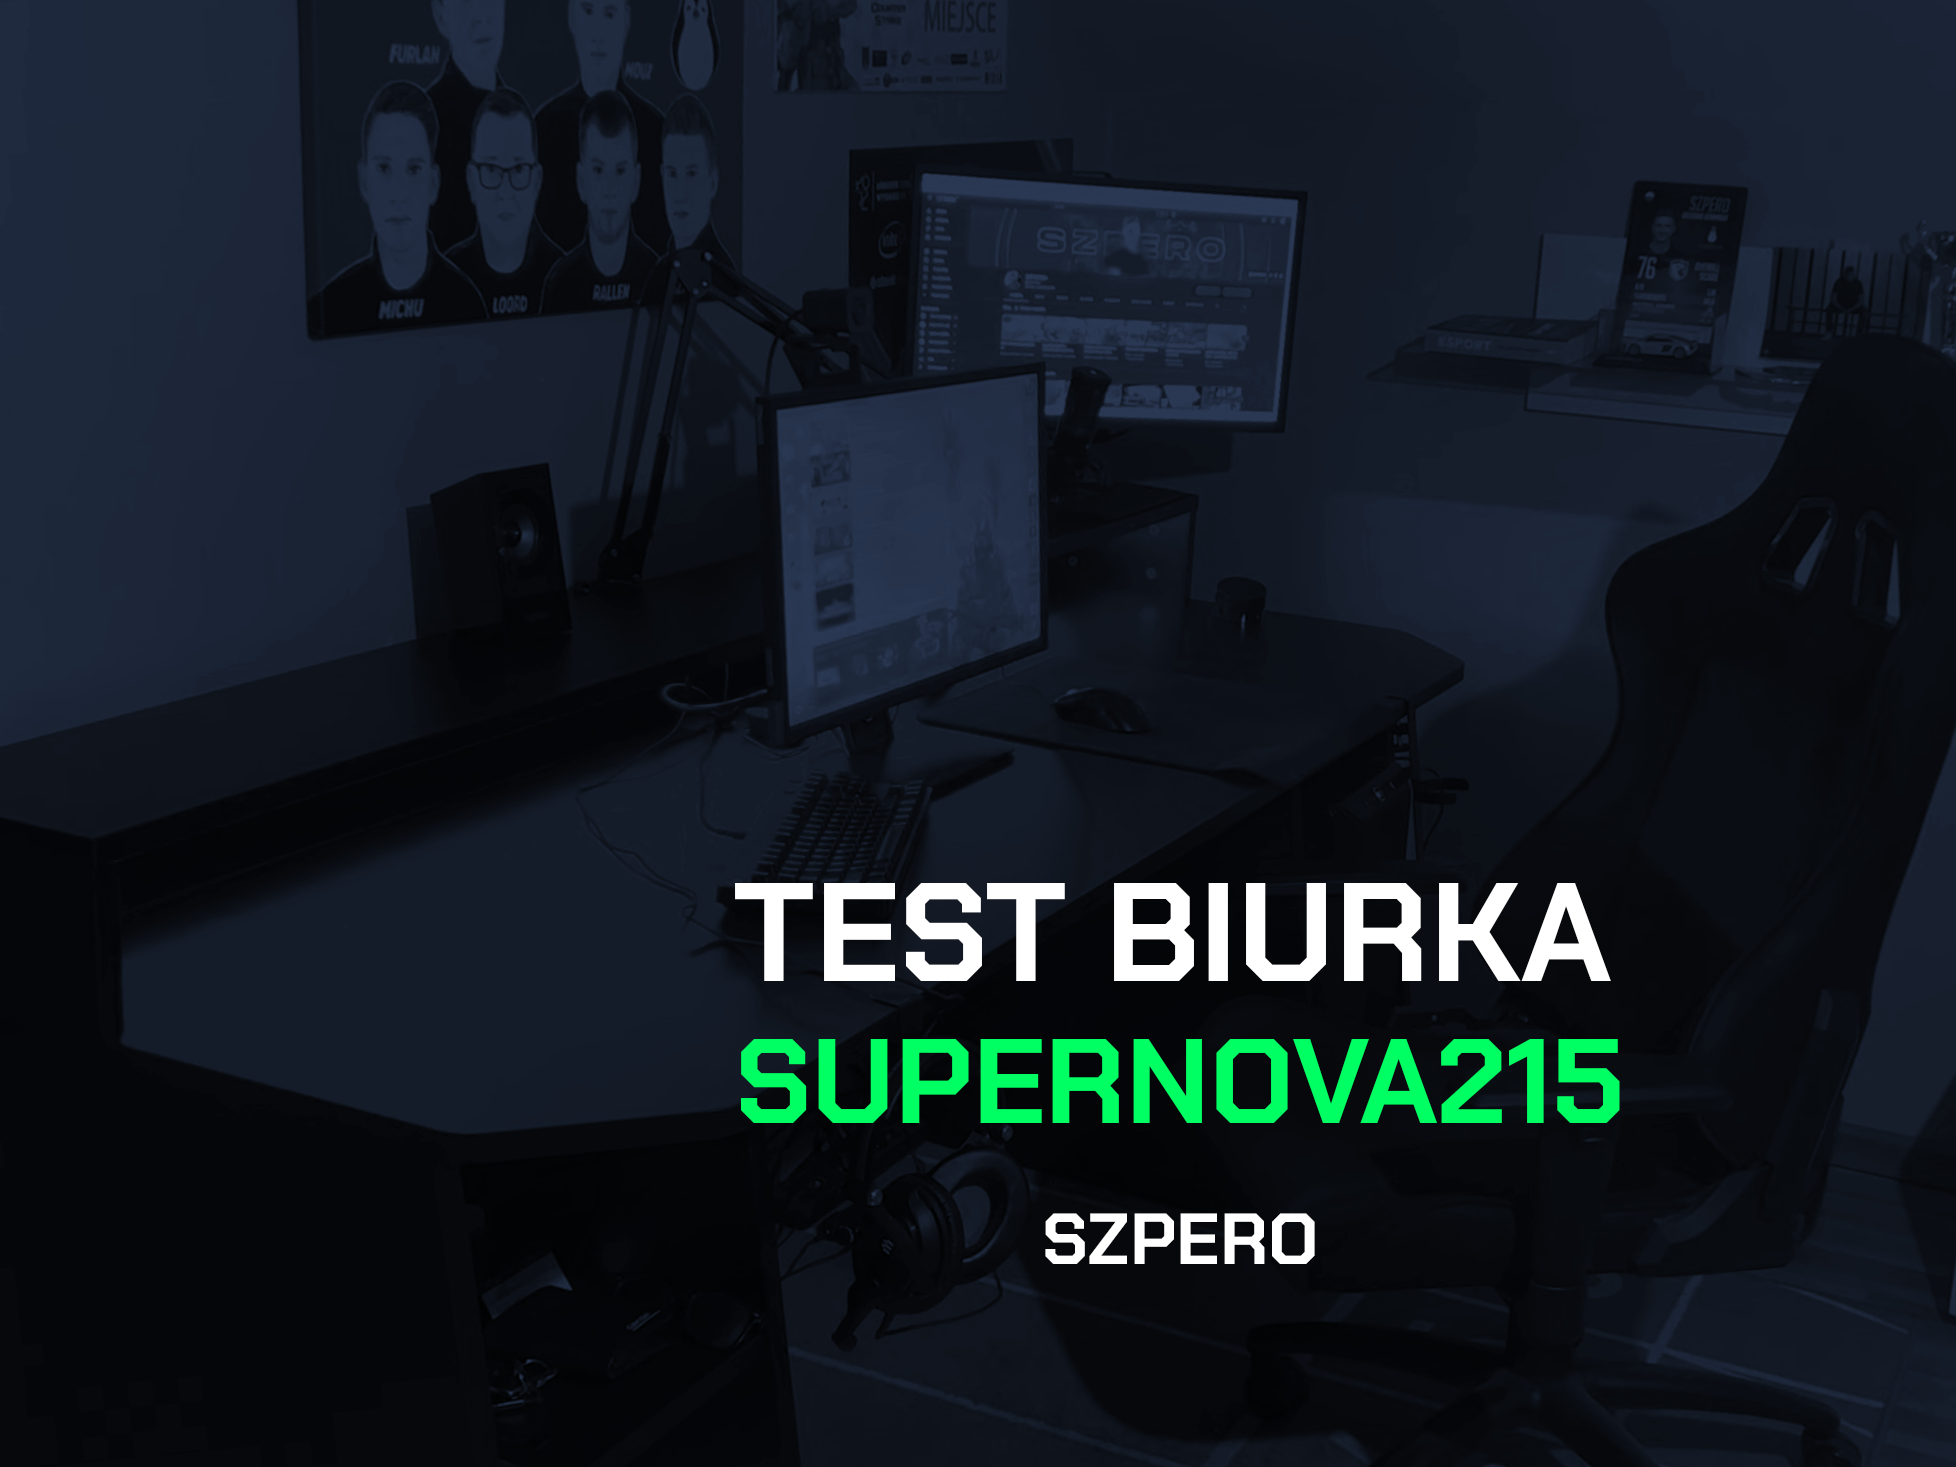 Nowe stanowisko gamingowe SZPERO i recenzja SUPERNOVA215